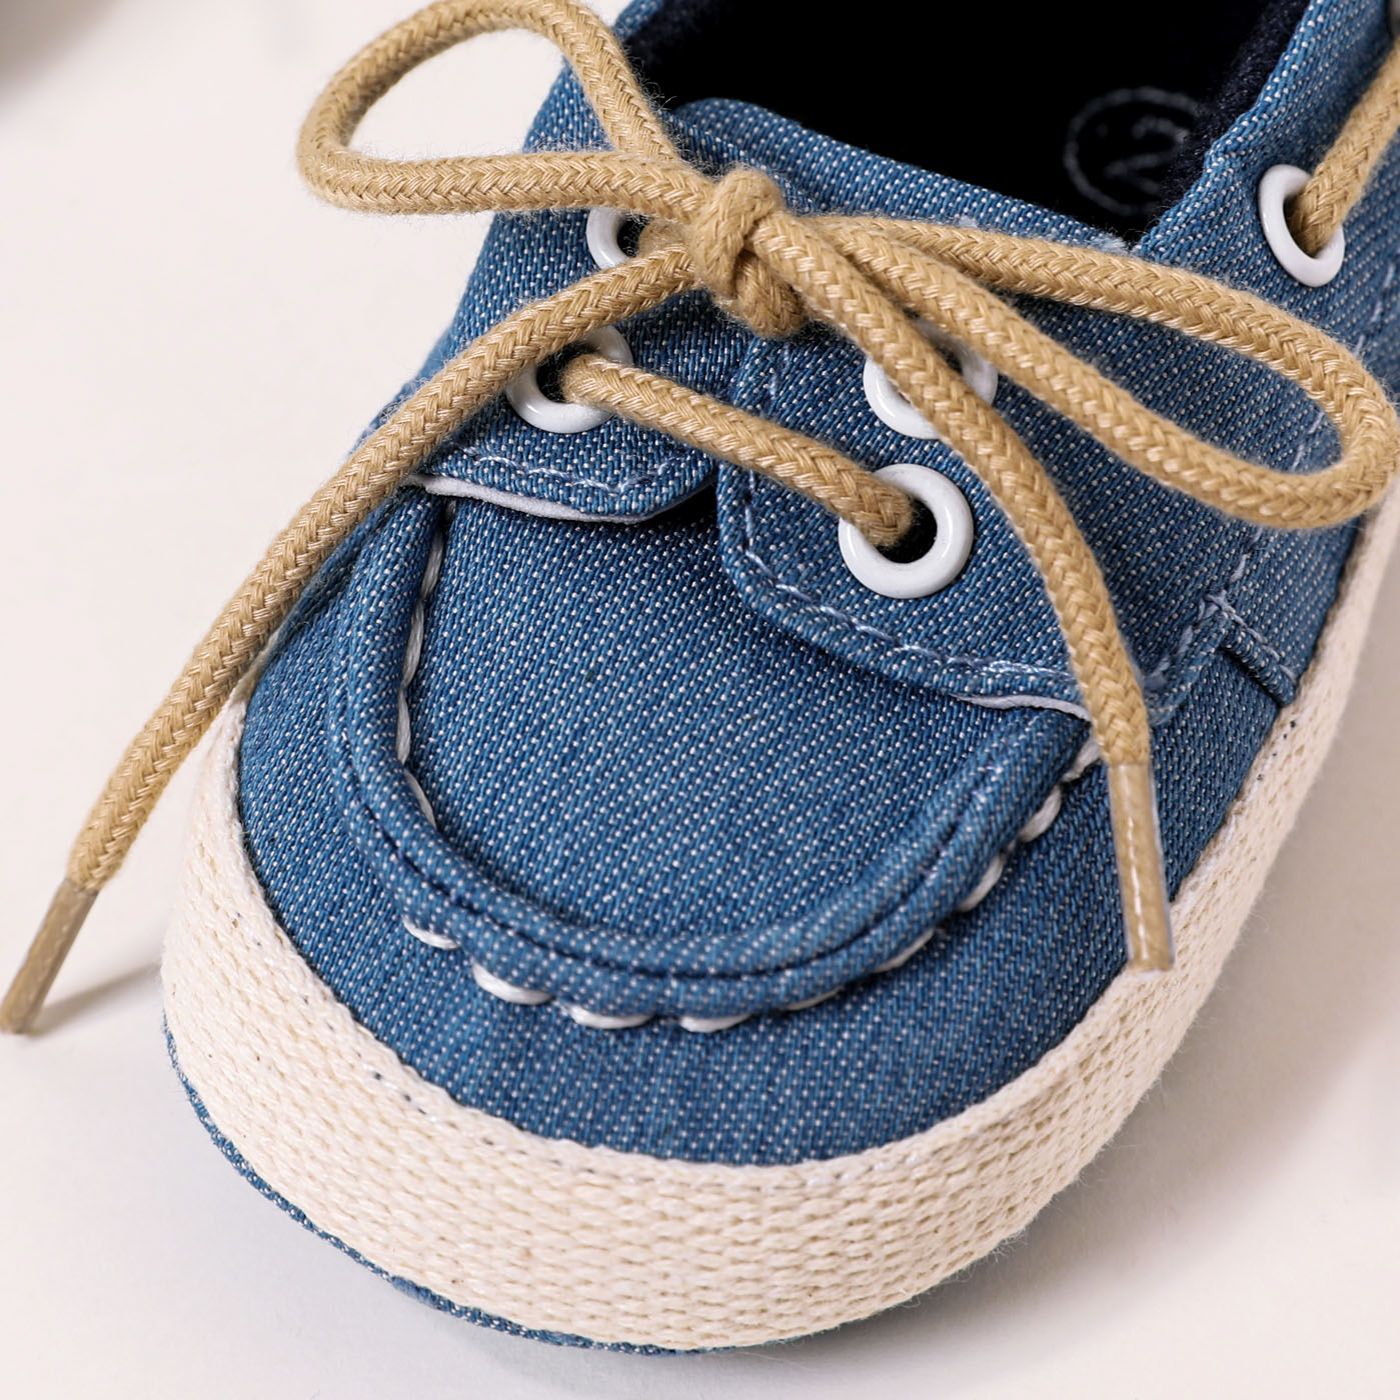 Baby Girl 2pcs Childlike Stripe Sweatshirt And Denim Jeans Set/ Socks / Denim Shoes